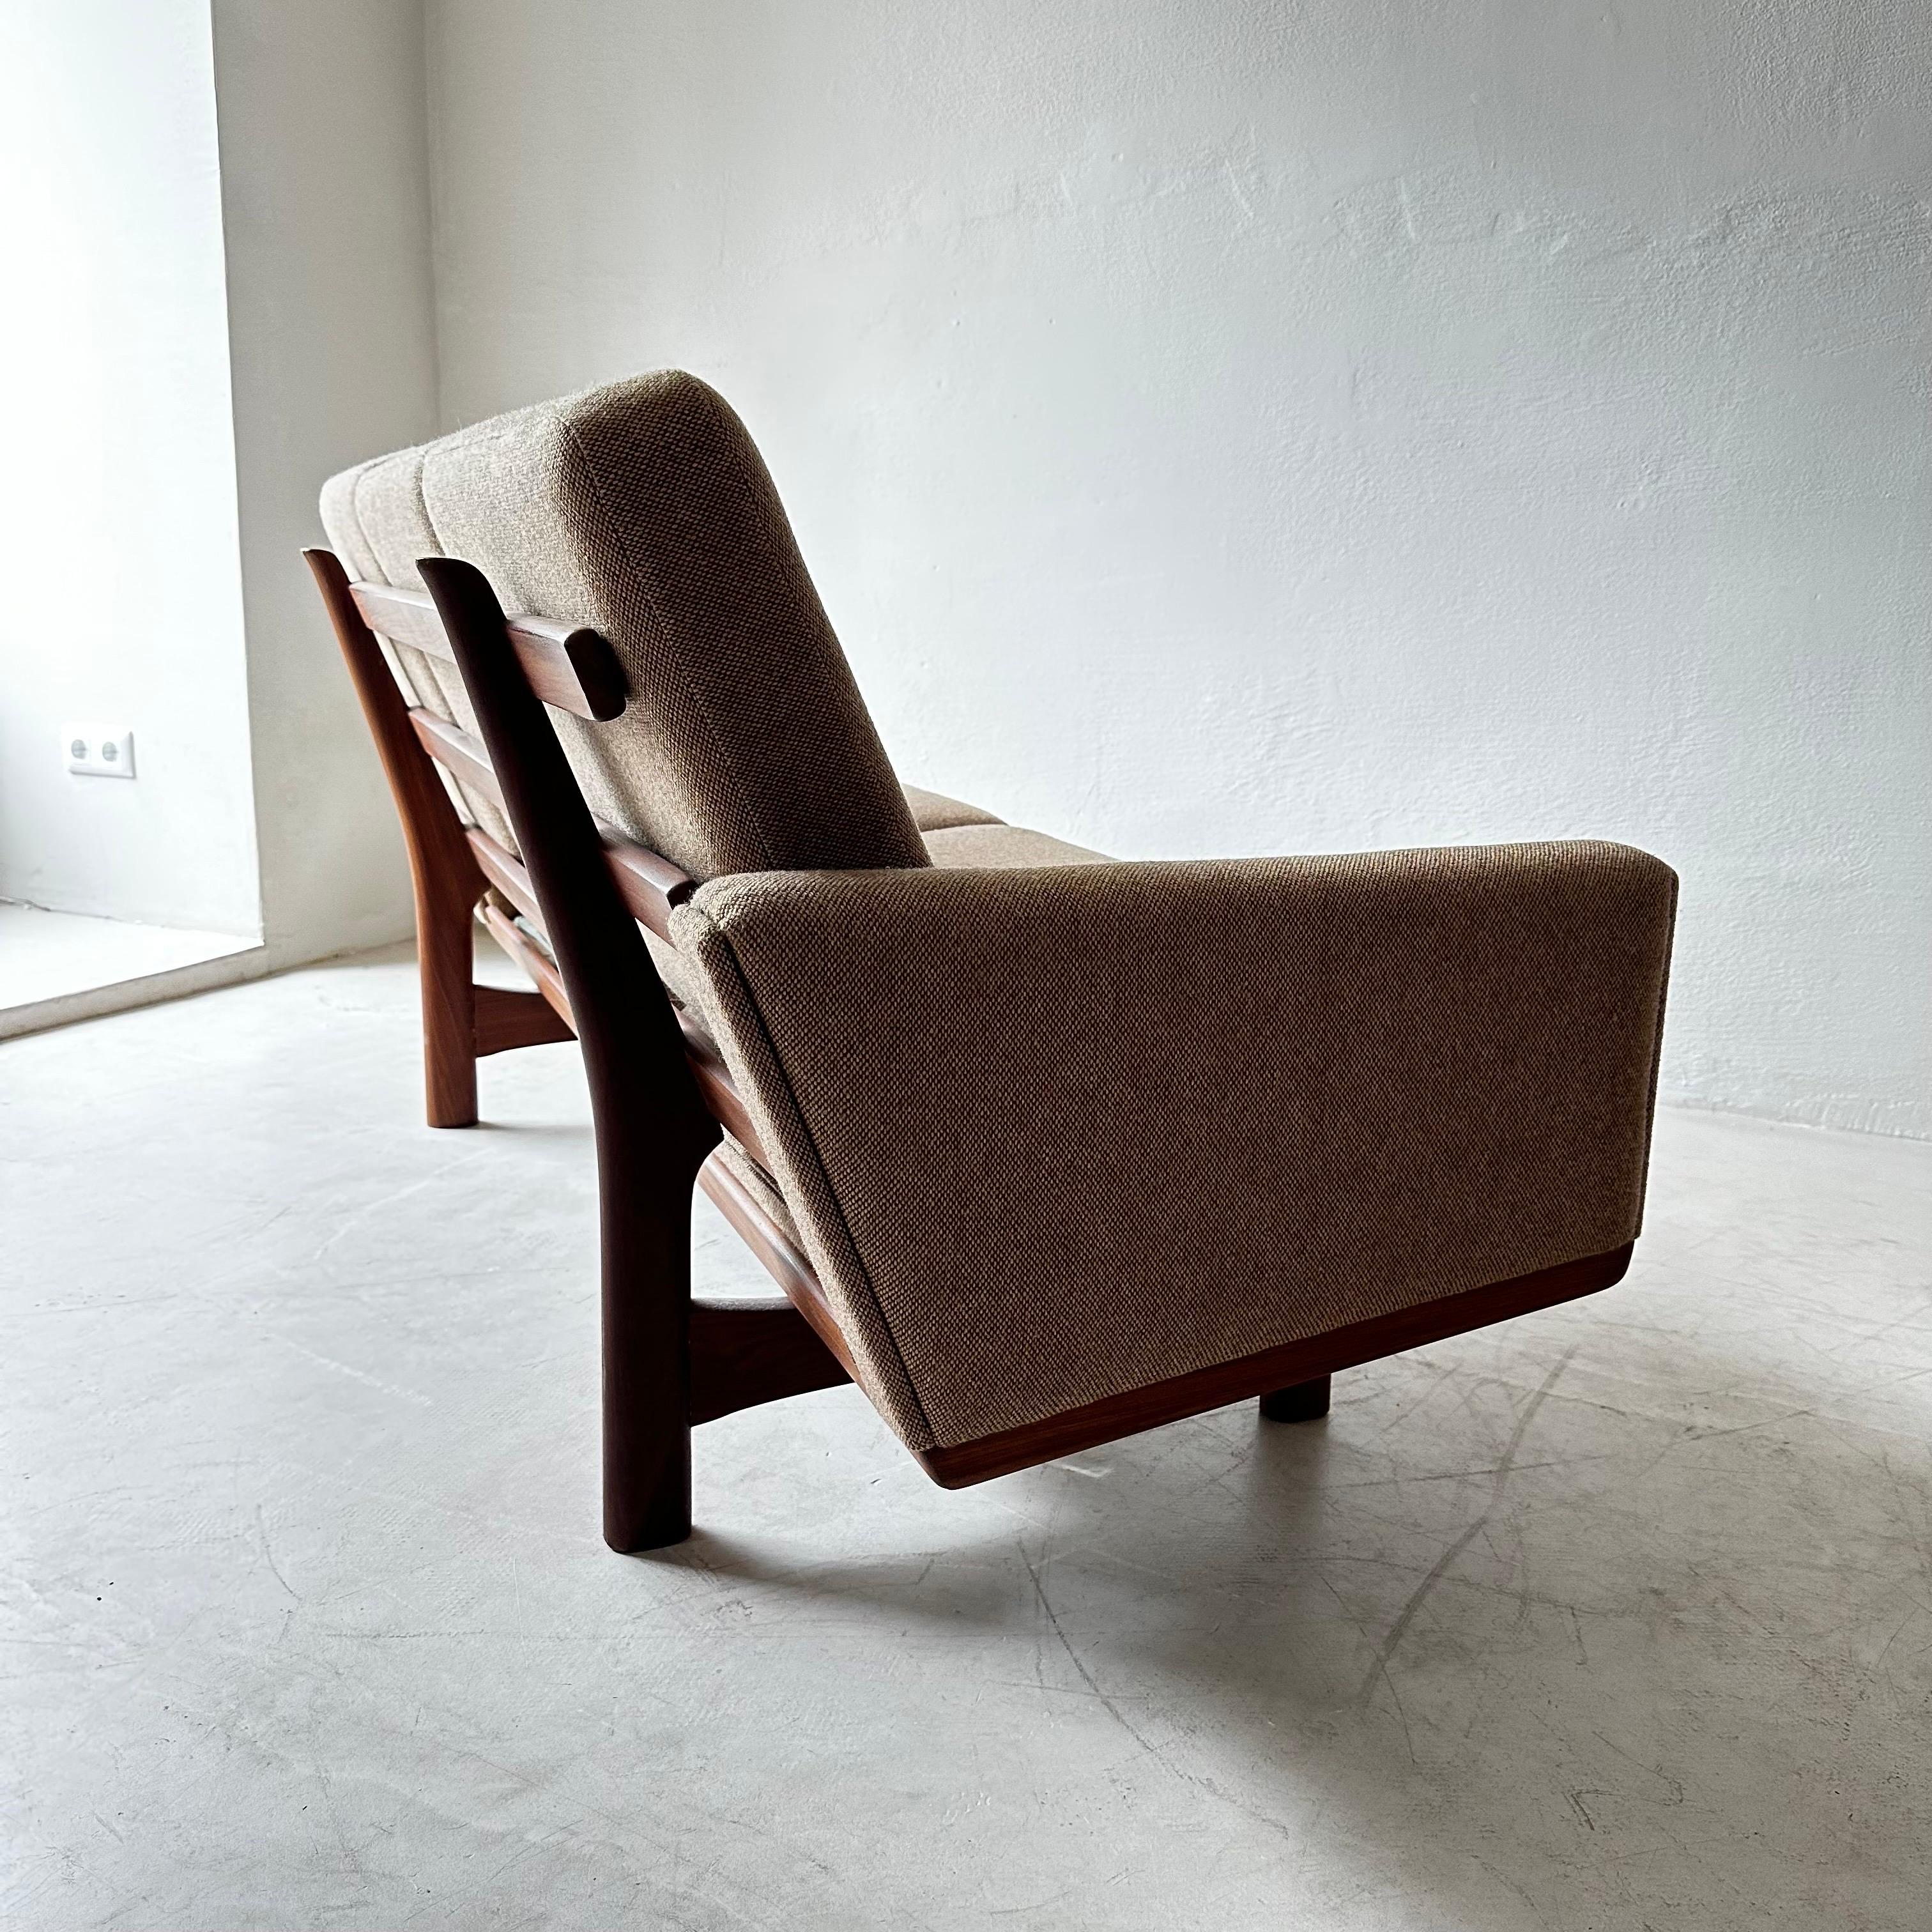 Three-Seat Teak-Framed Sofa, Model GE-236, by Hans Wegner for GETAMA For Sale 5